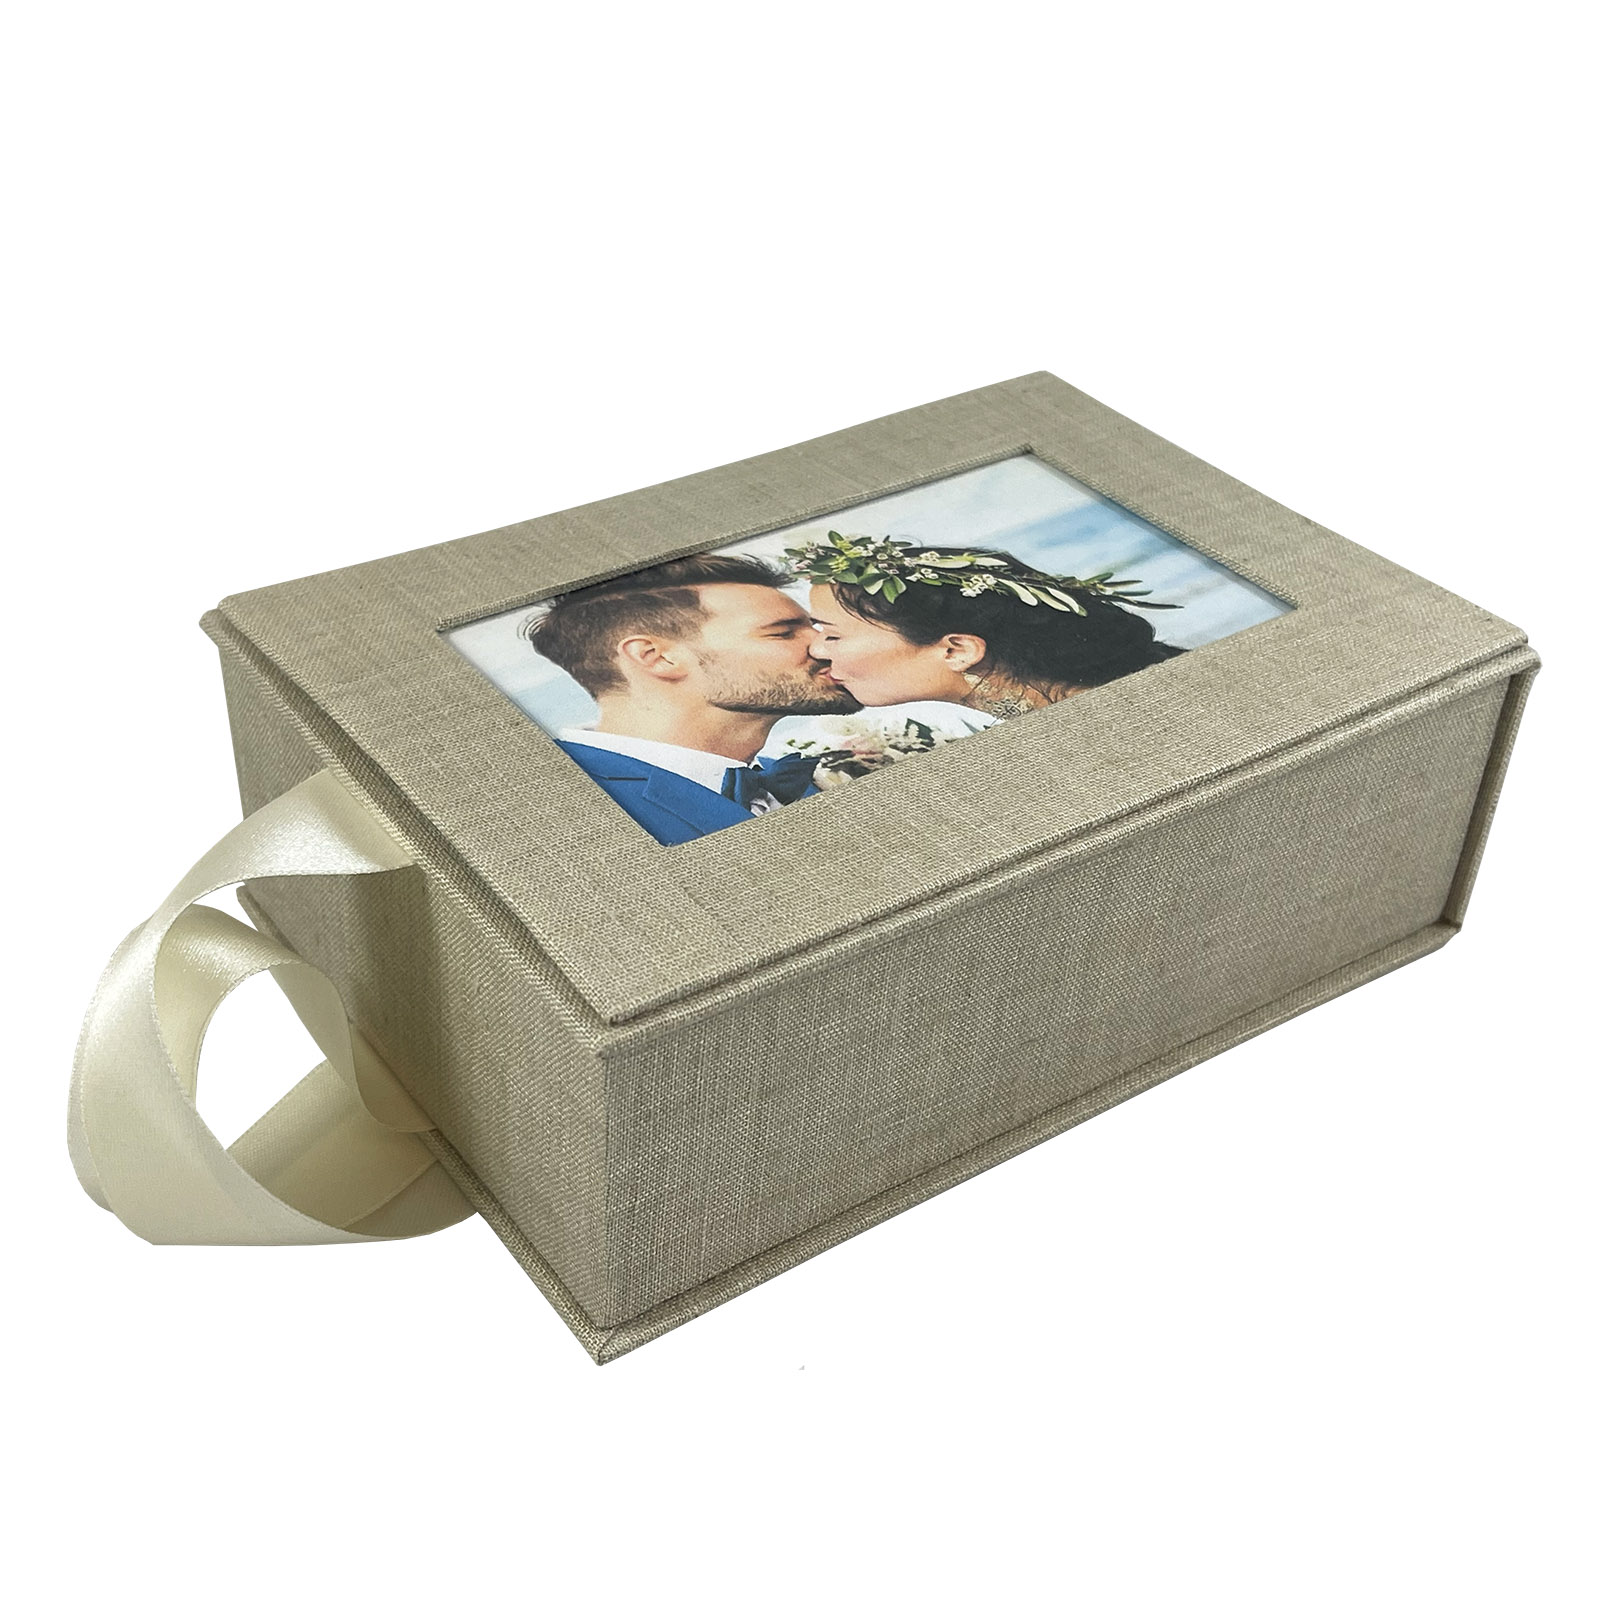 Linen photo box for 4x6 inches photos